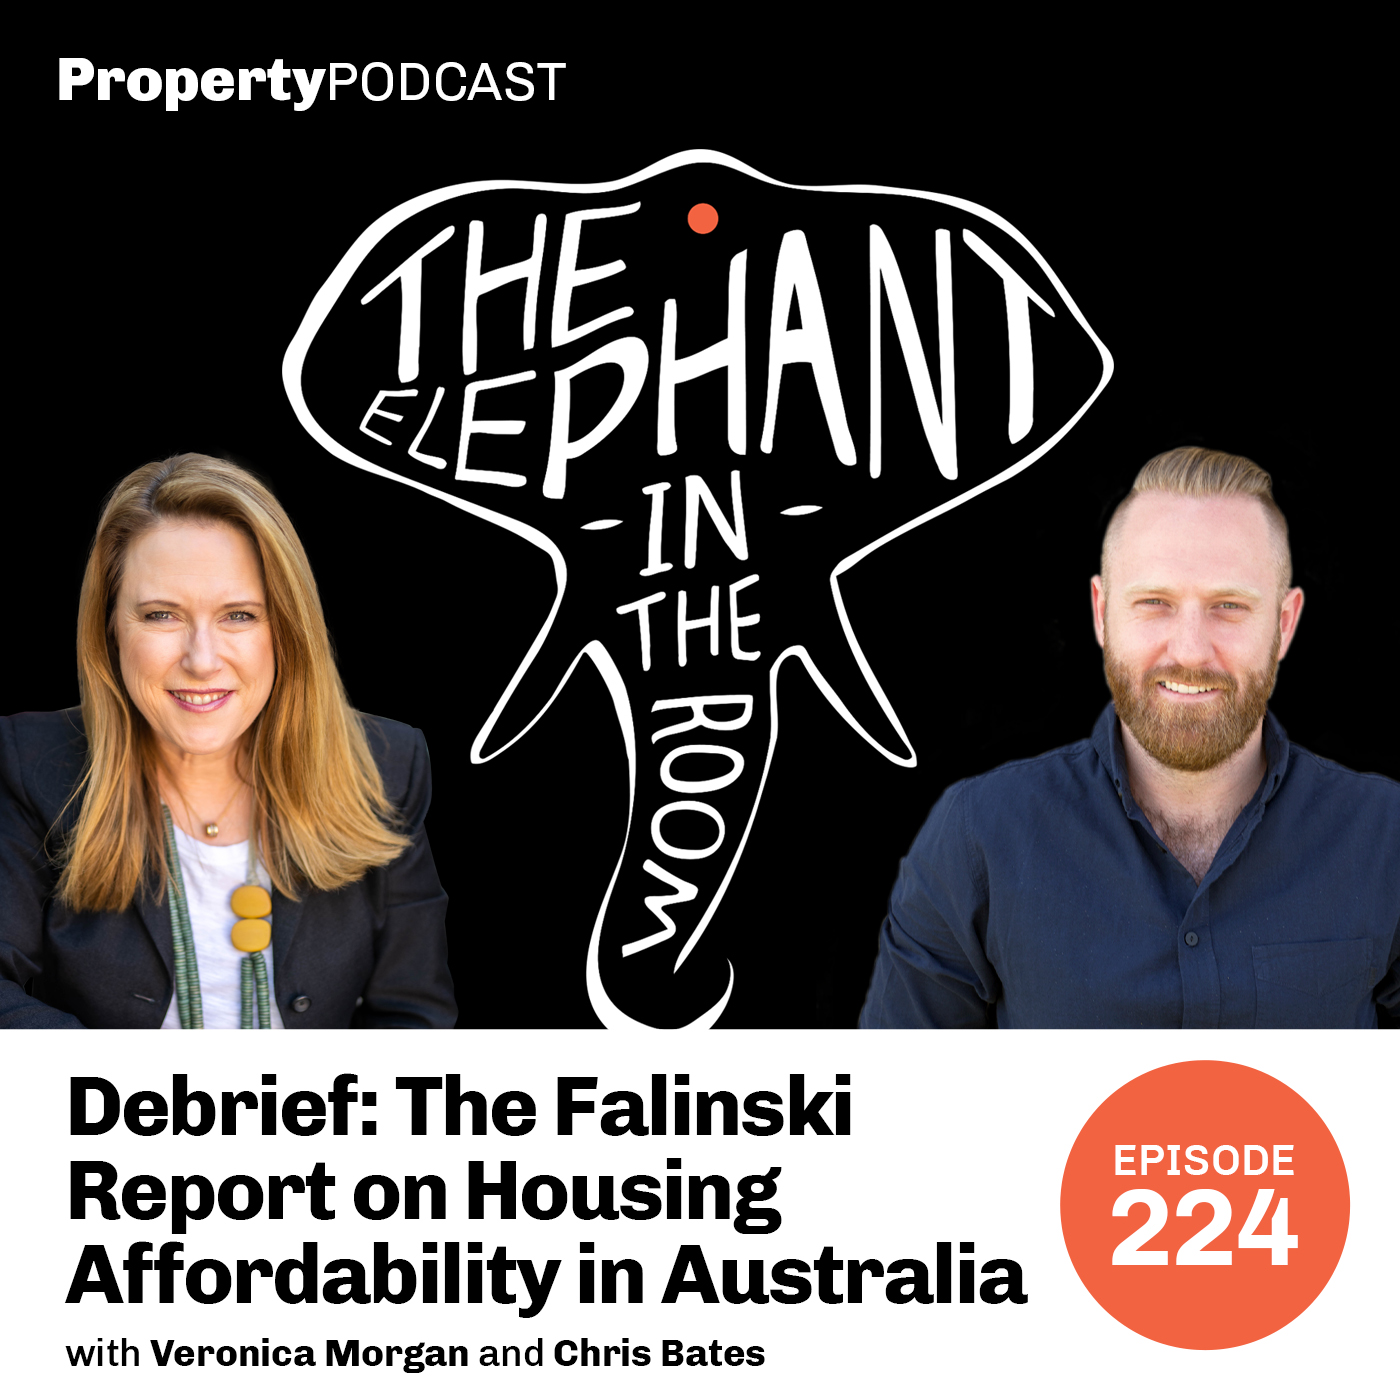 Debrief: The Falinski Report on Housing Affordability in Australia